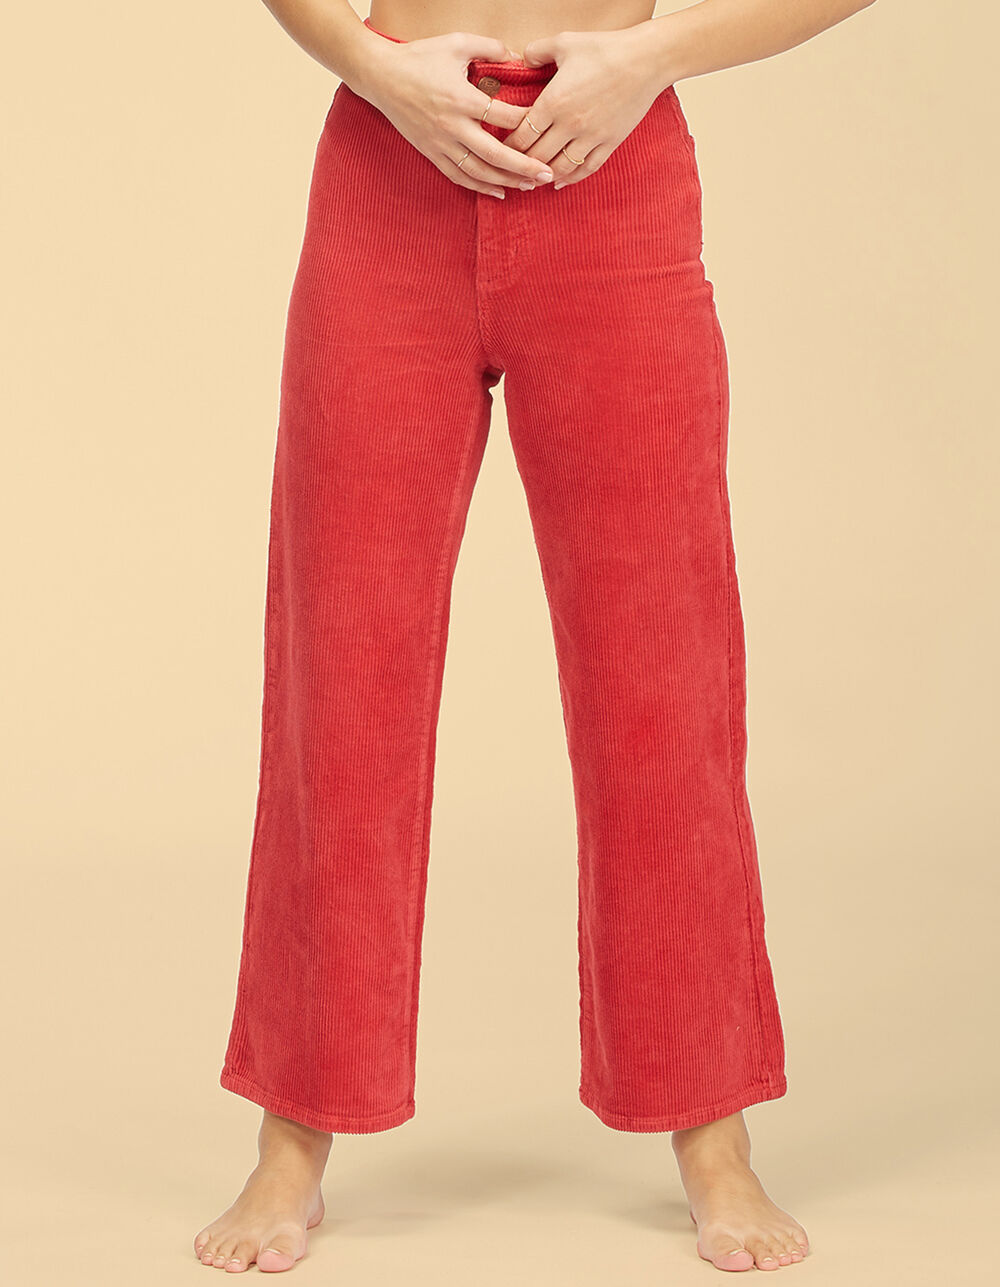 BILLABONG x Wrangler The Retro Womens Red Corduroy Pants - RED